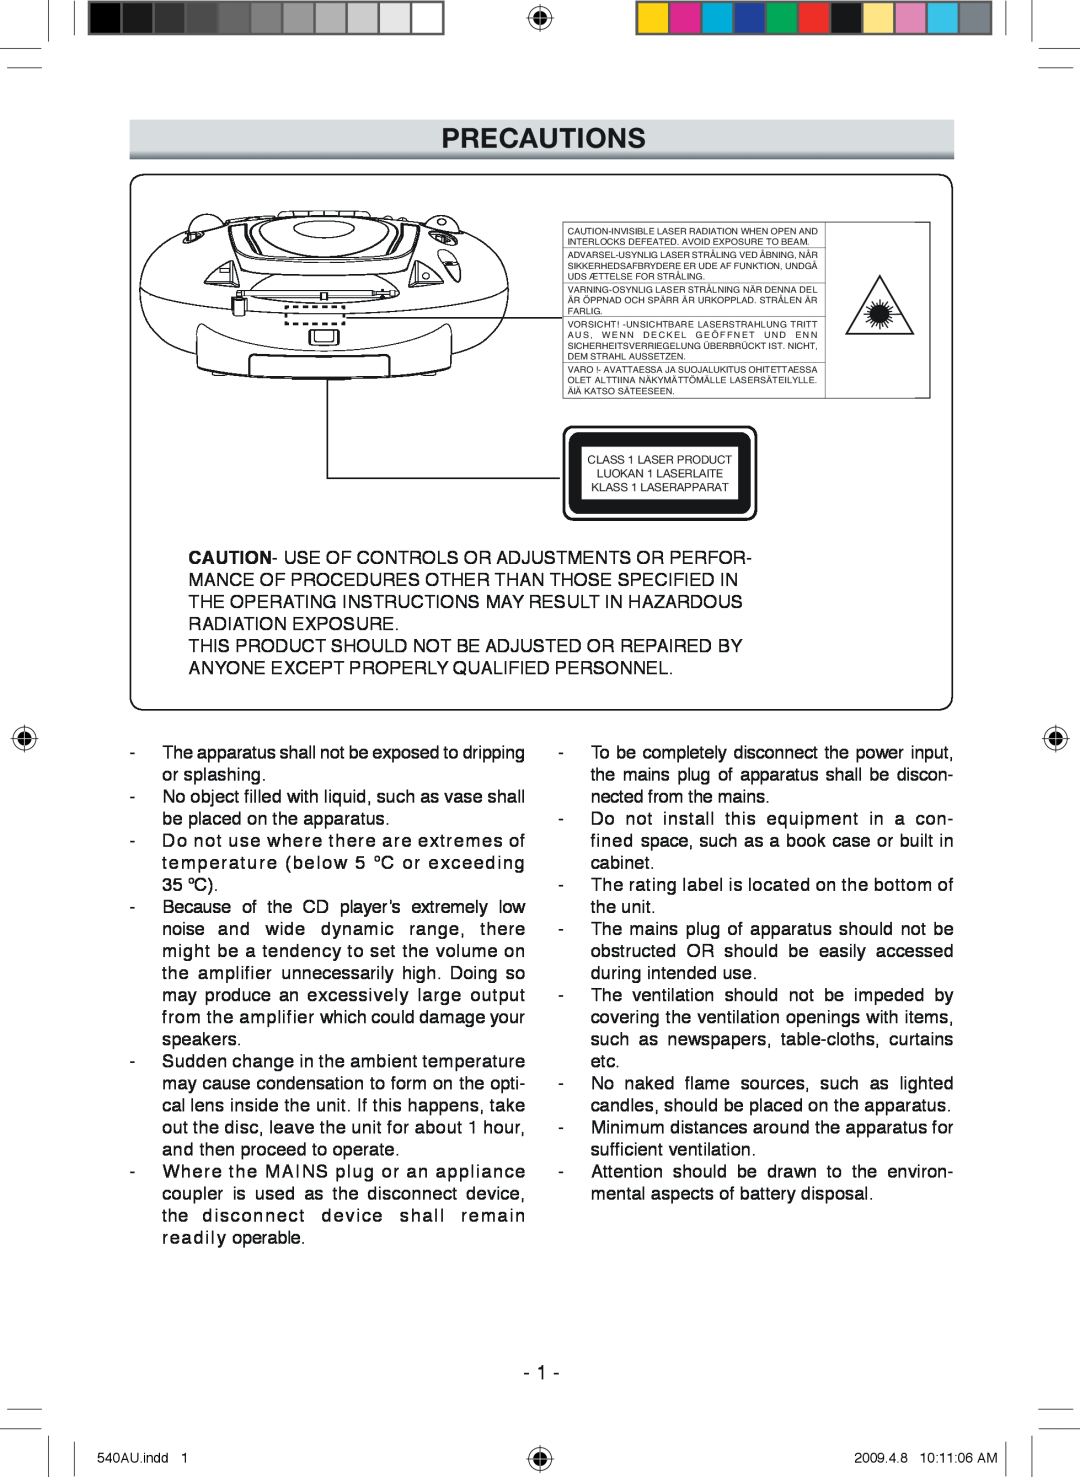 Sanyo MCD-ZX541F, MCD-ZX540F instruction manual Precautions, 540AU.indd, 2009.4.8 10 11 06 AM 